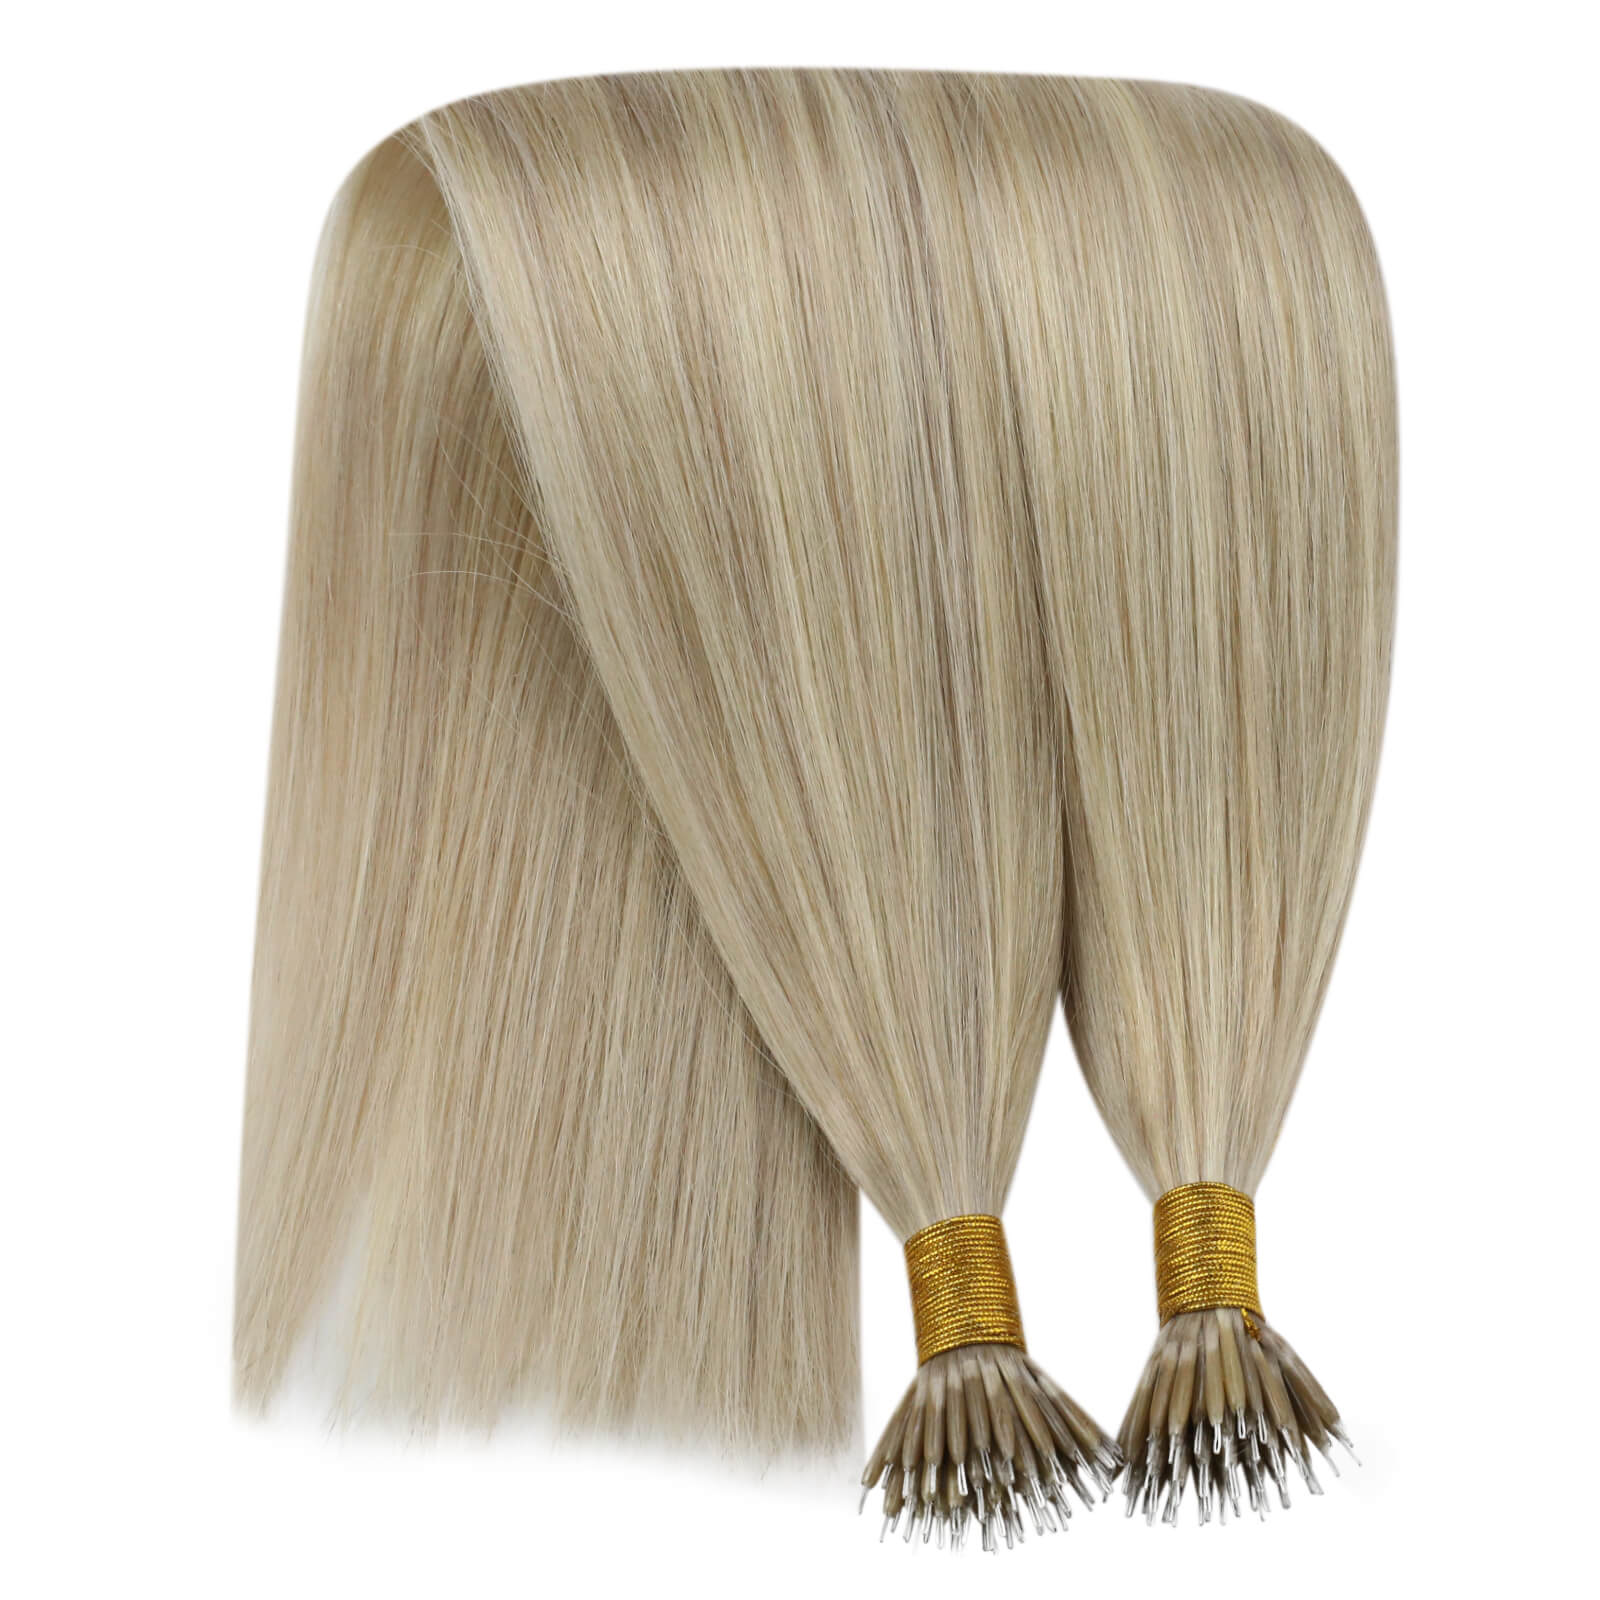 nano loop hair extensions real human hair highlight ash blonde with bleach blonde